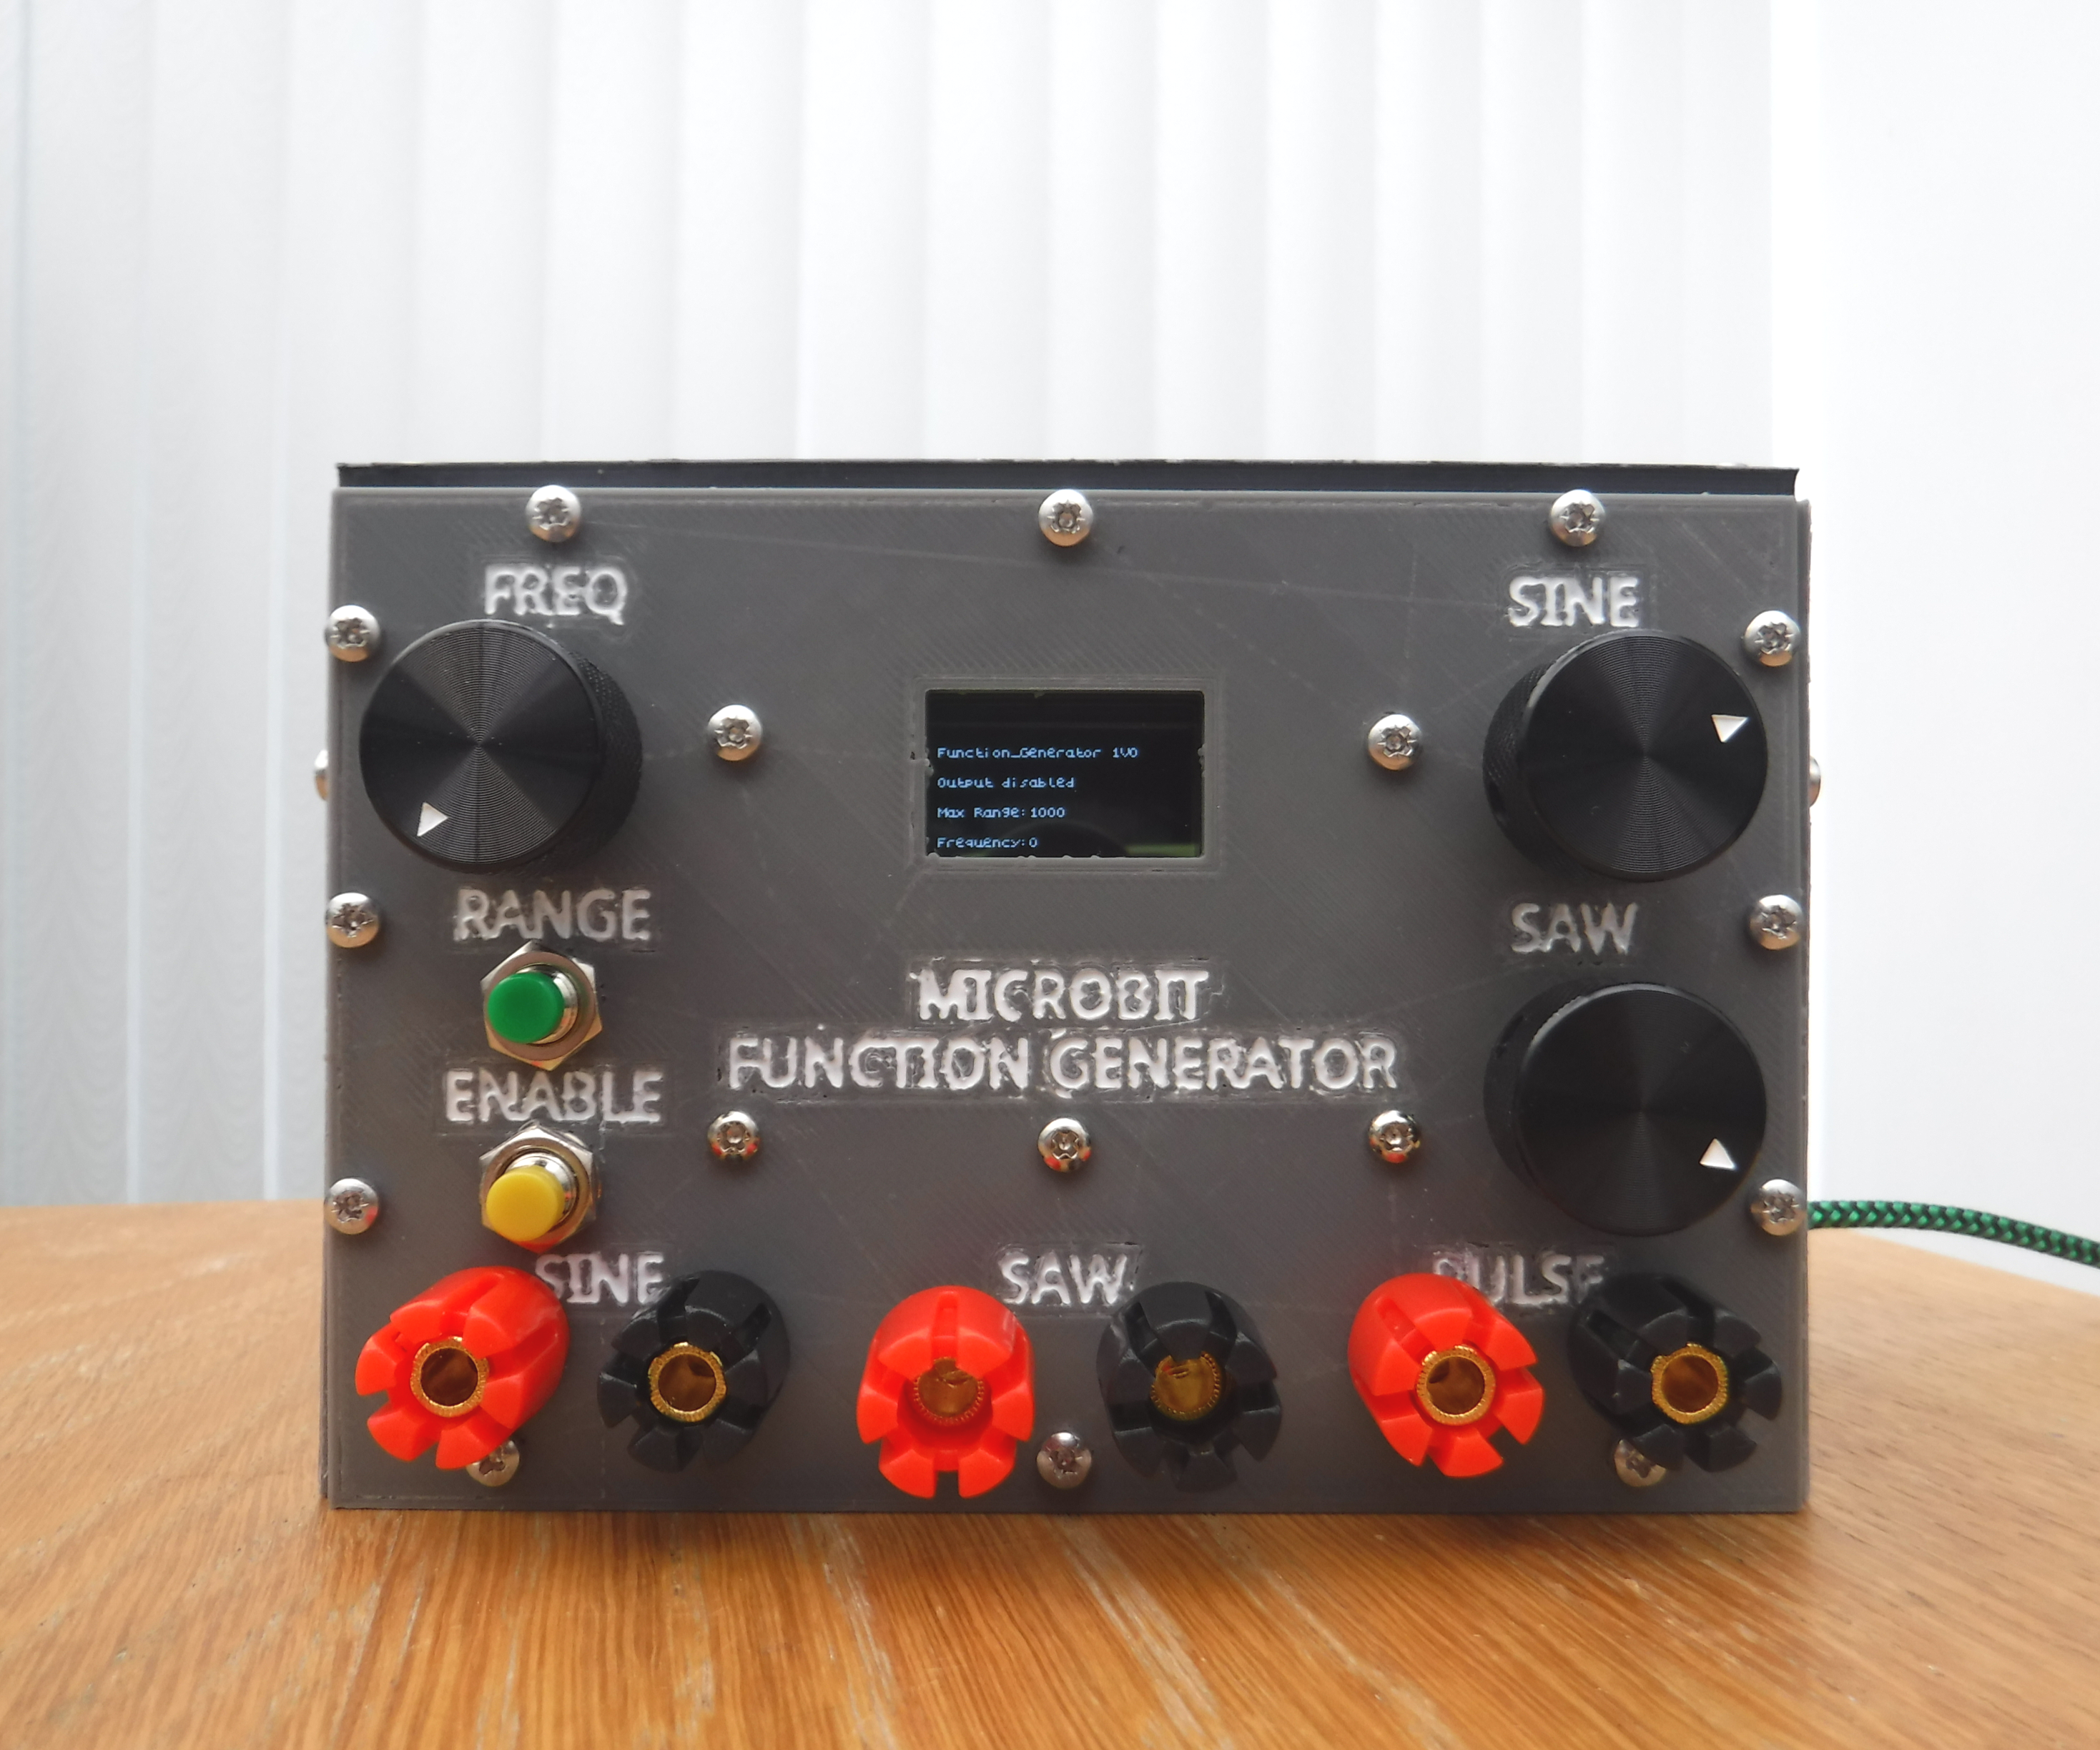 Microbit Function Generator